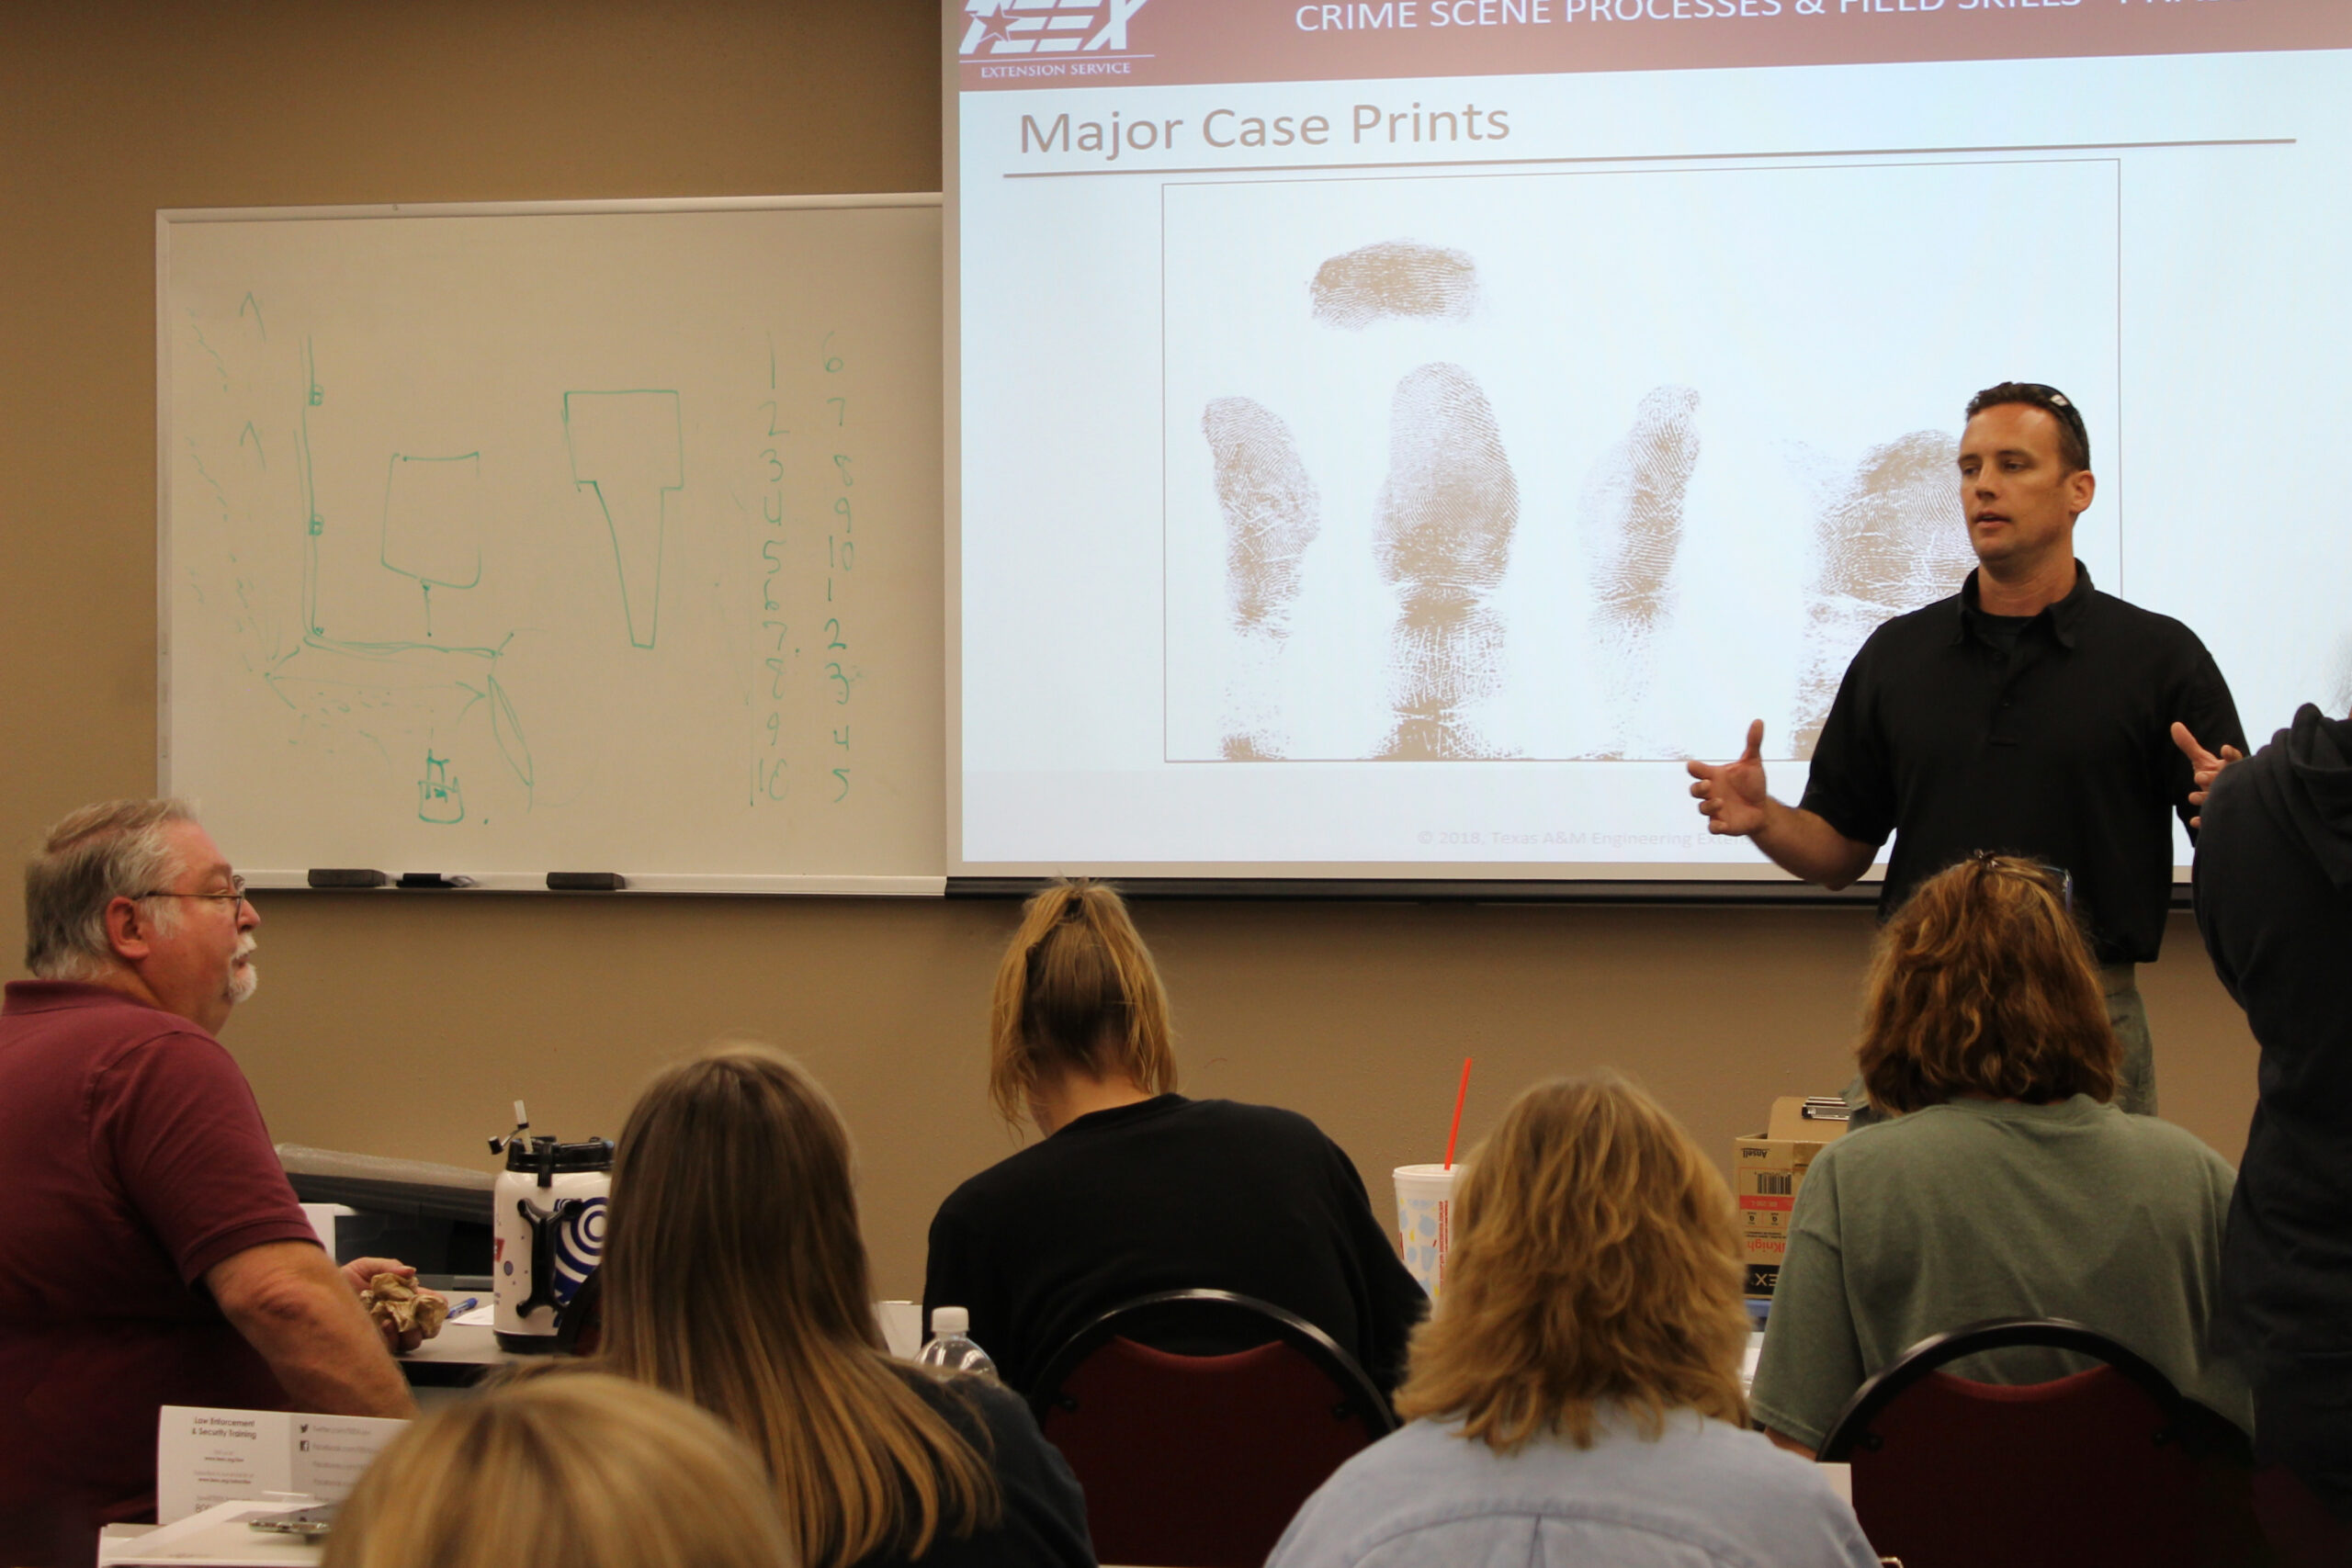 instructor showing class overhead slides of fingerprints